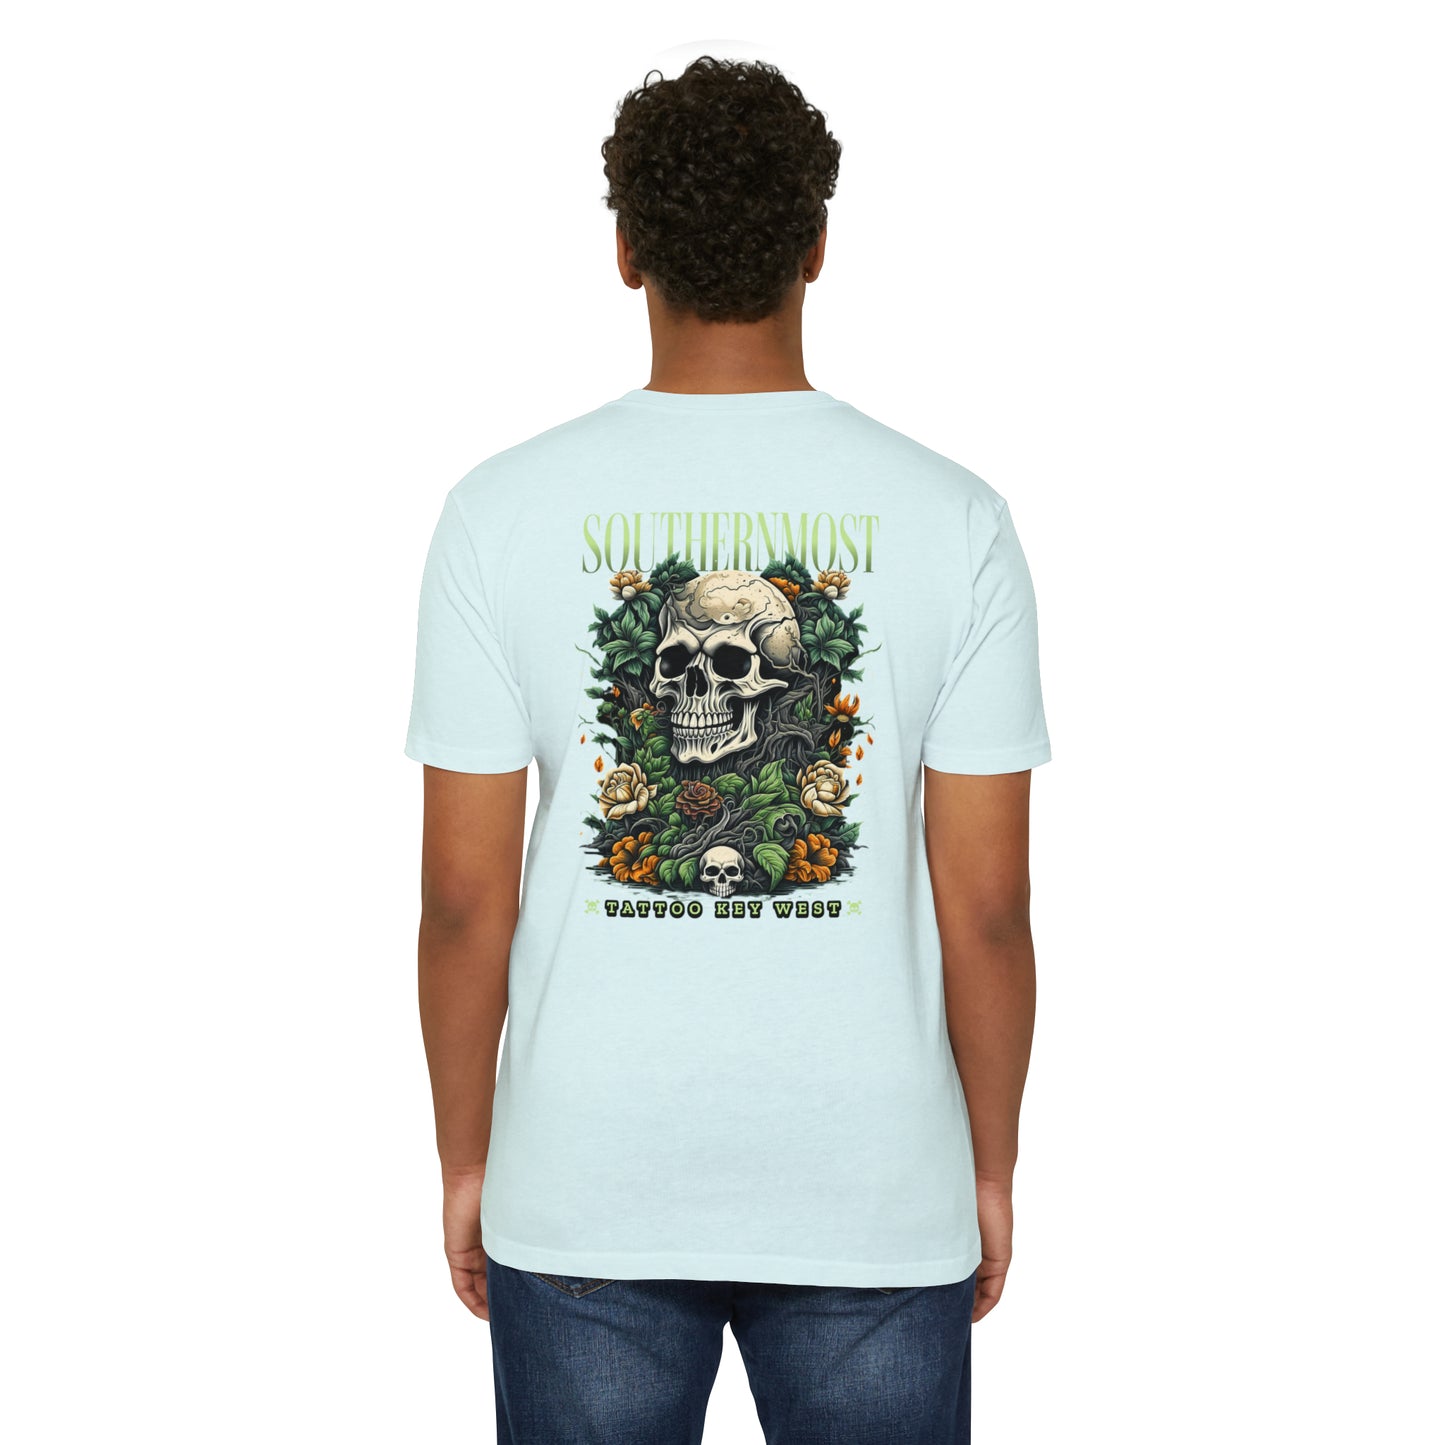 Southernmost Tattoo Skulls T-shirt